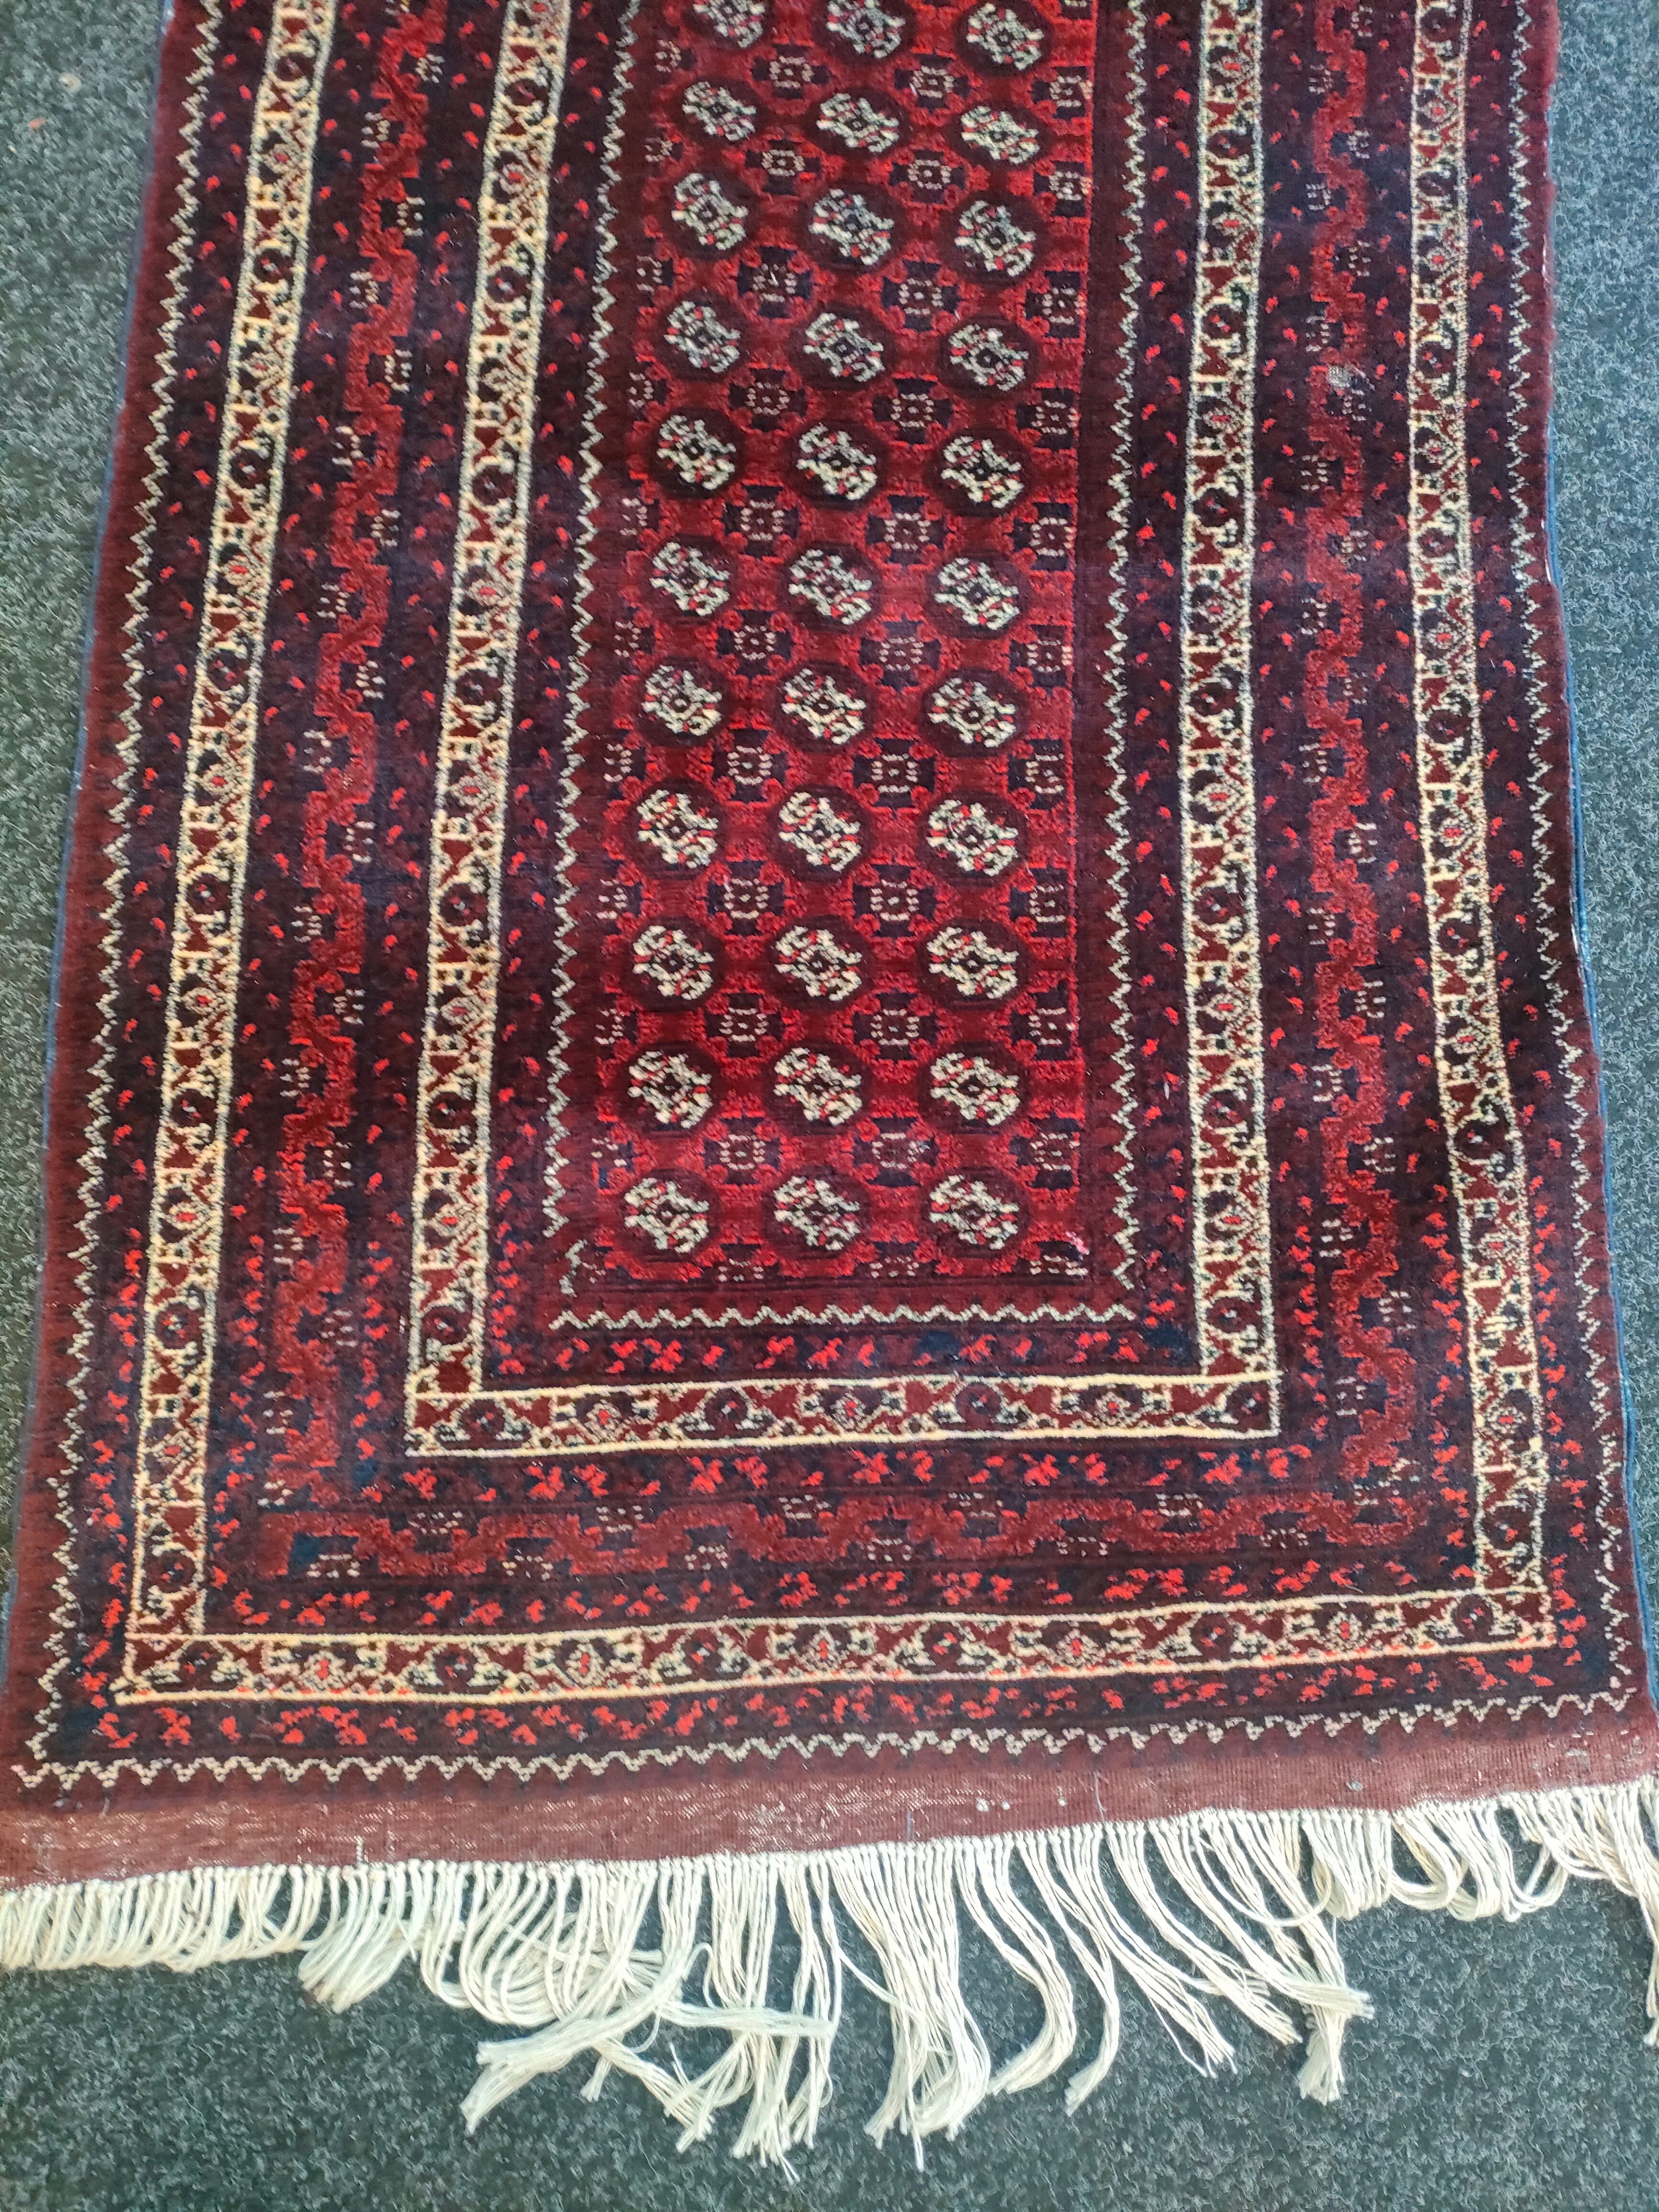 An Afghan hand woven rug [186x85cm] - Image 5 of 5